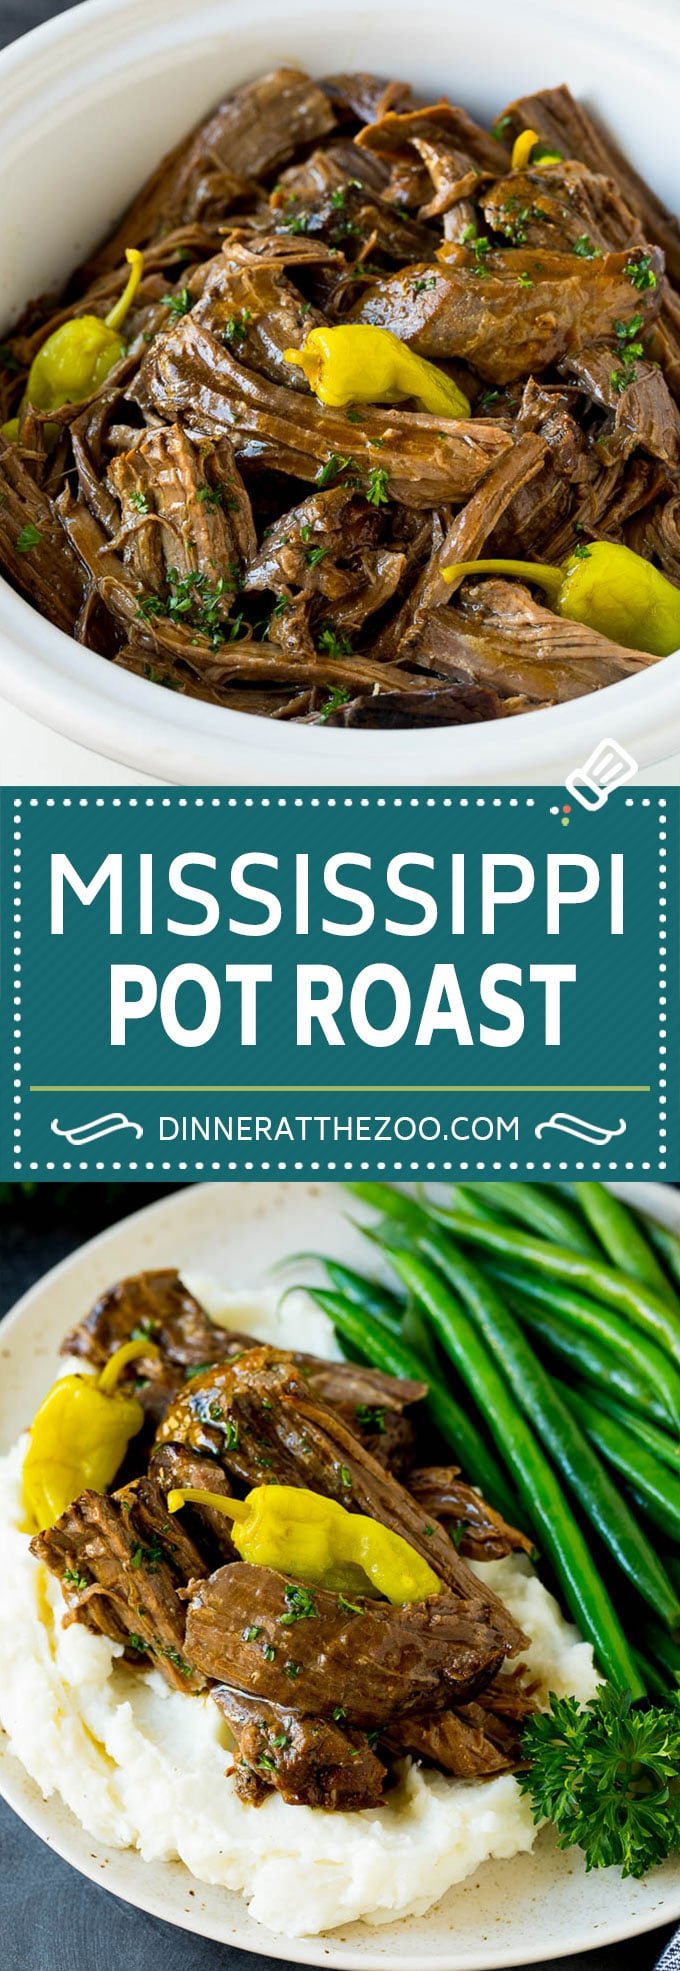 Mississippi Pot Roast #slowcooker #potroast #beef #crockpot #dinner #dinneratthezoo